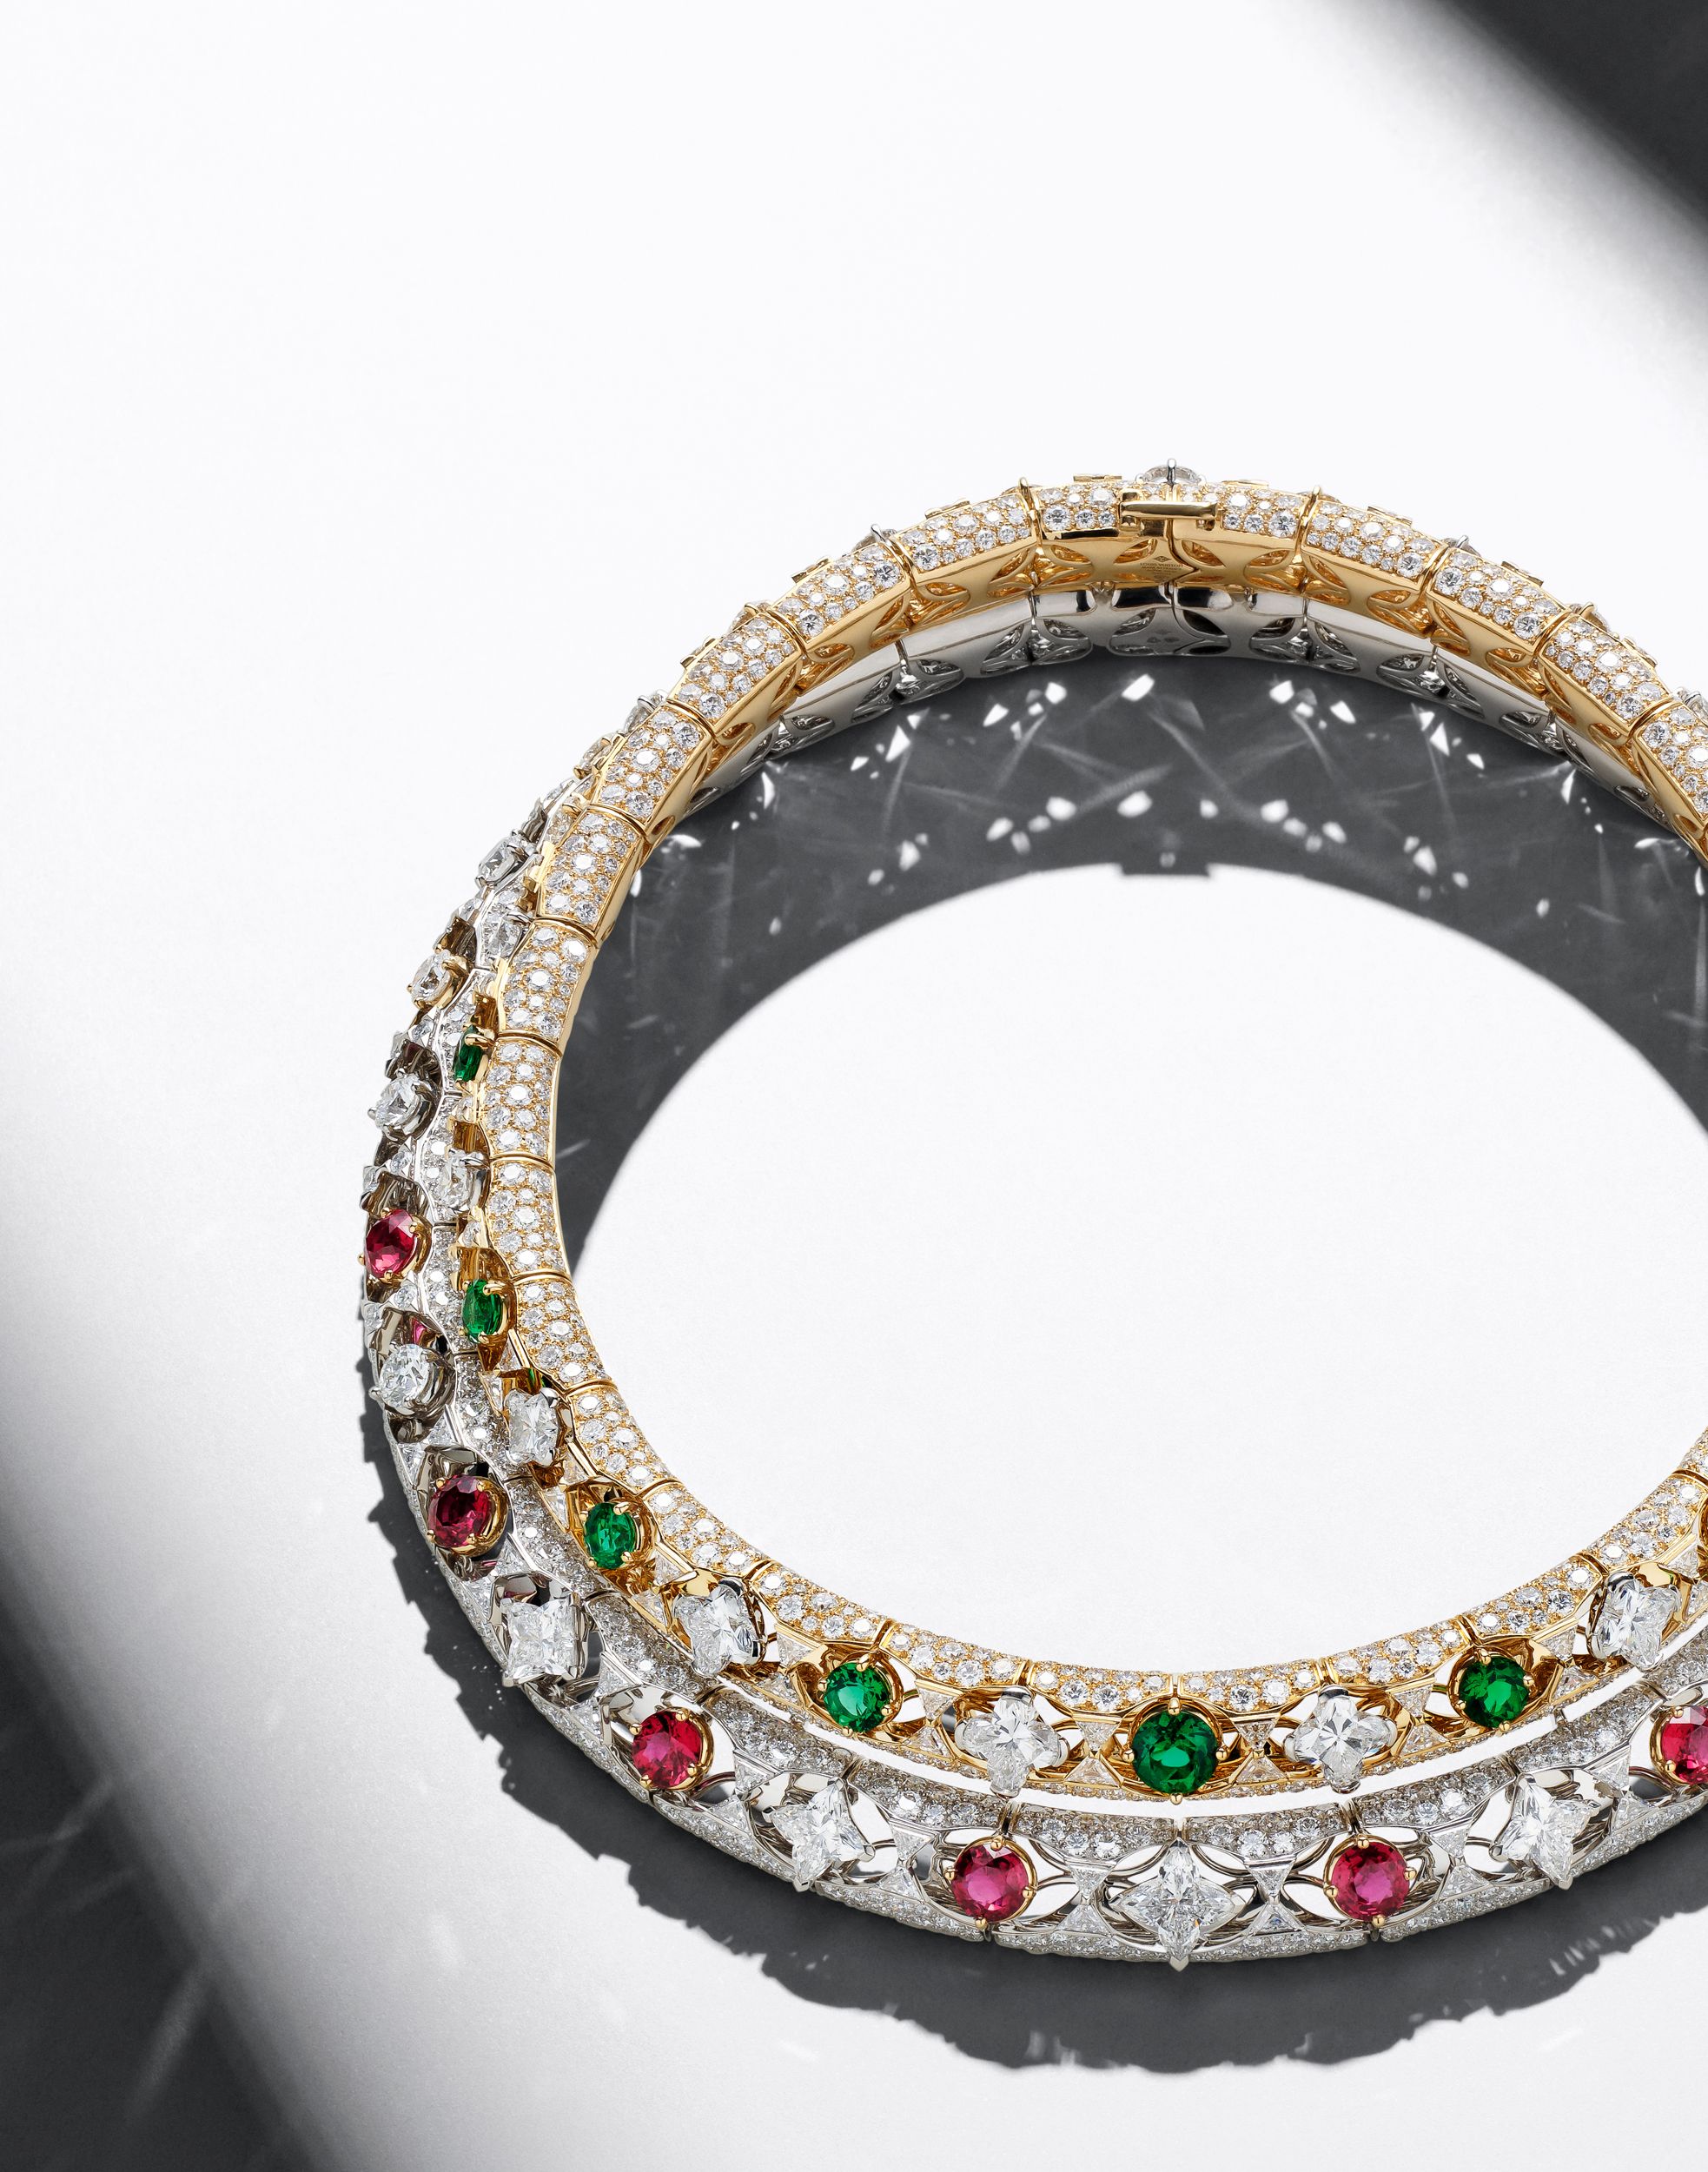 110 Louis Vuitton high jewelry ideas